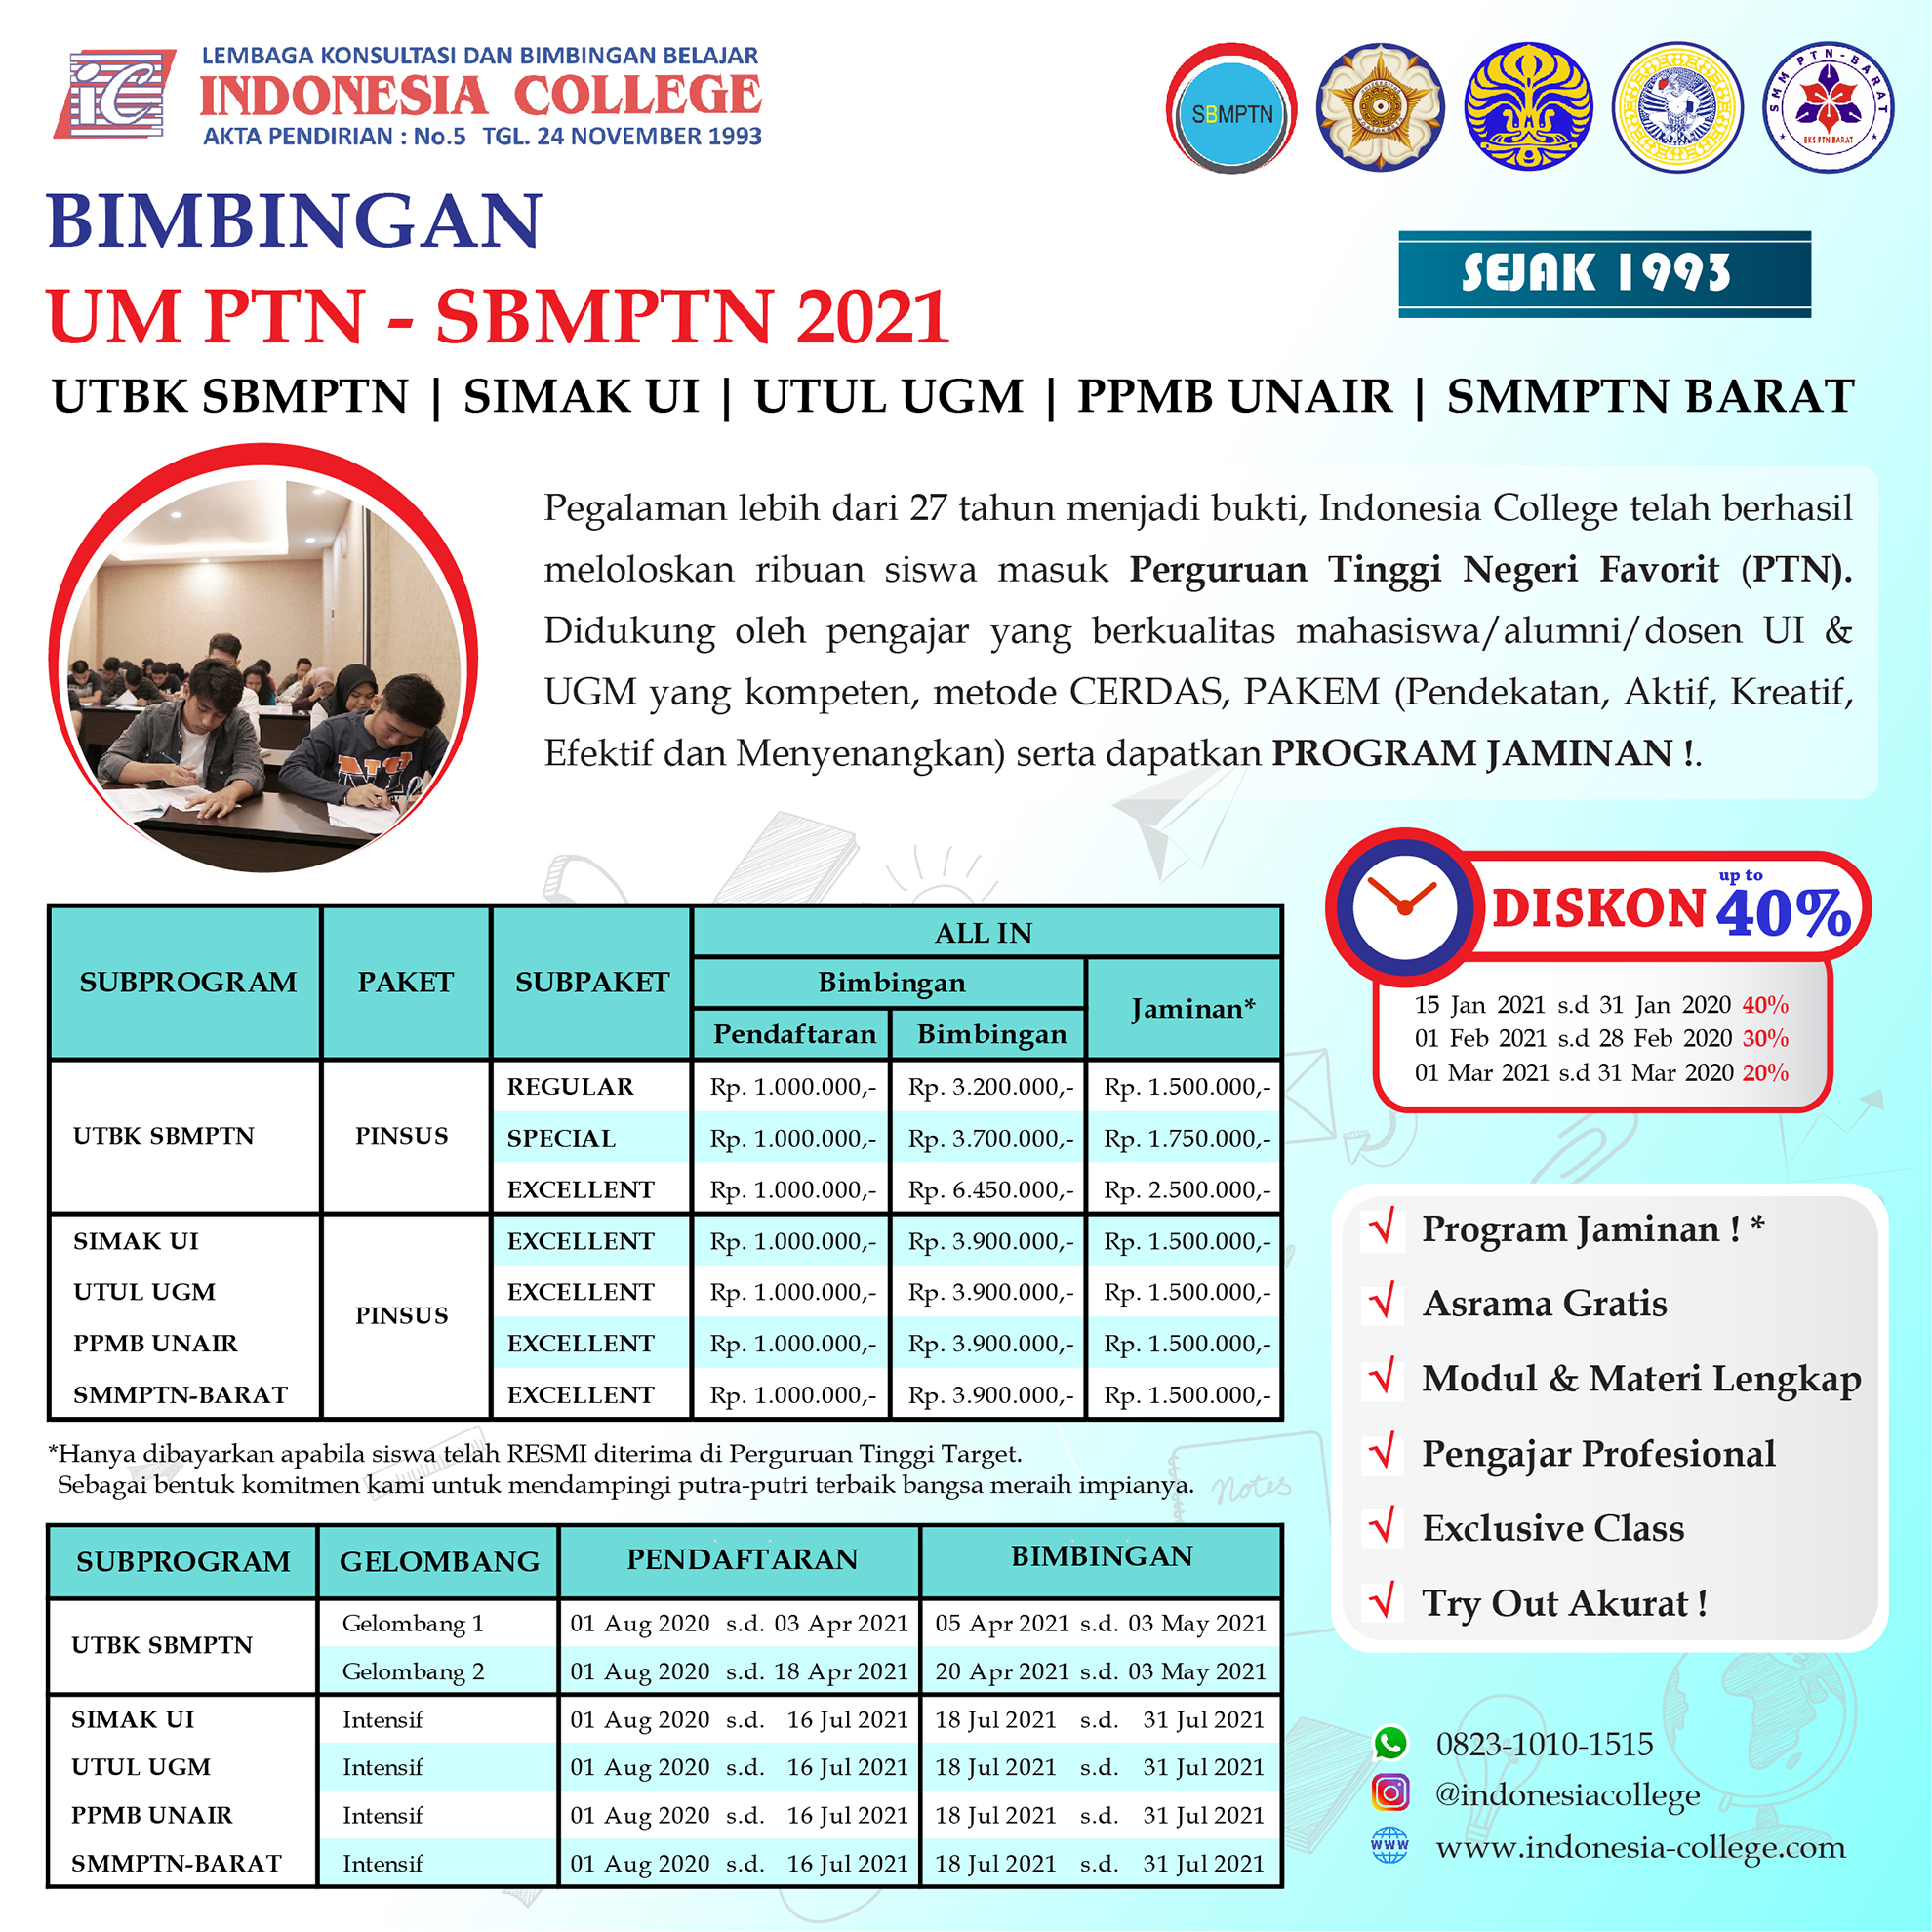 Biaya | LKBB Indonesia college